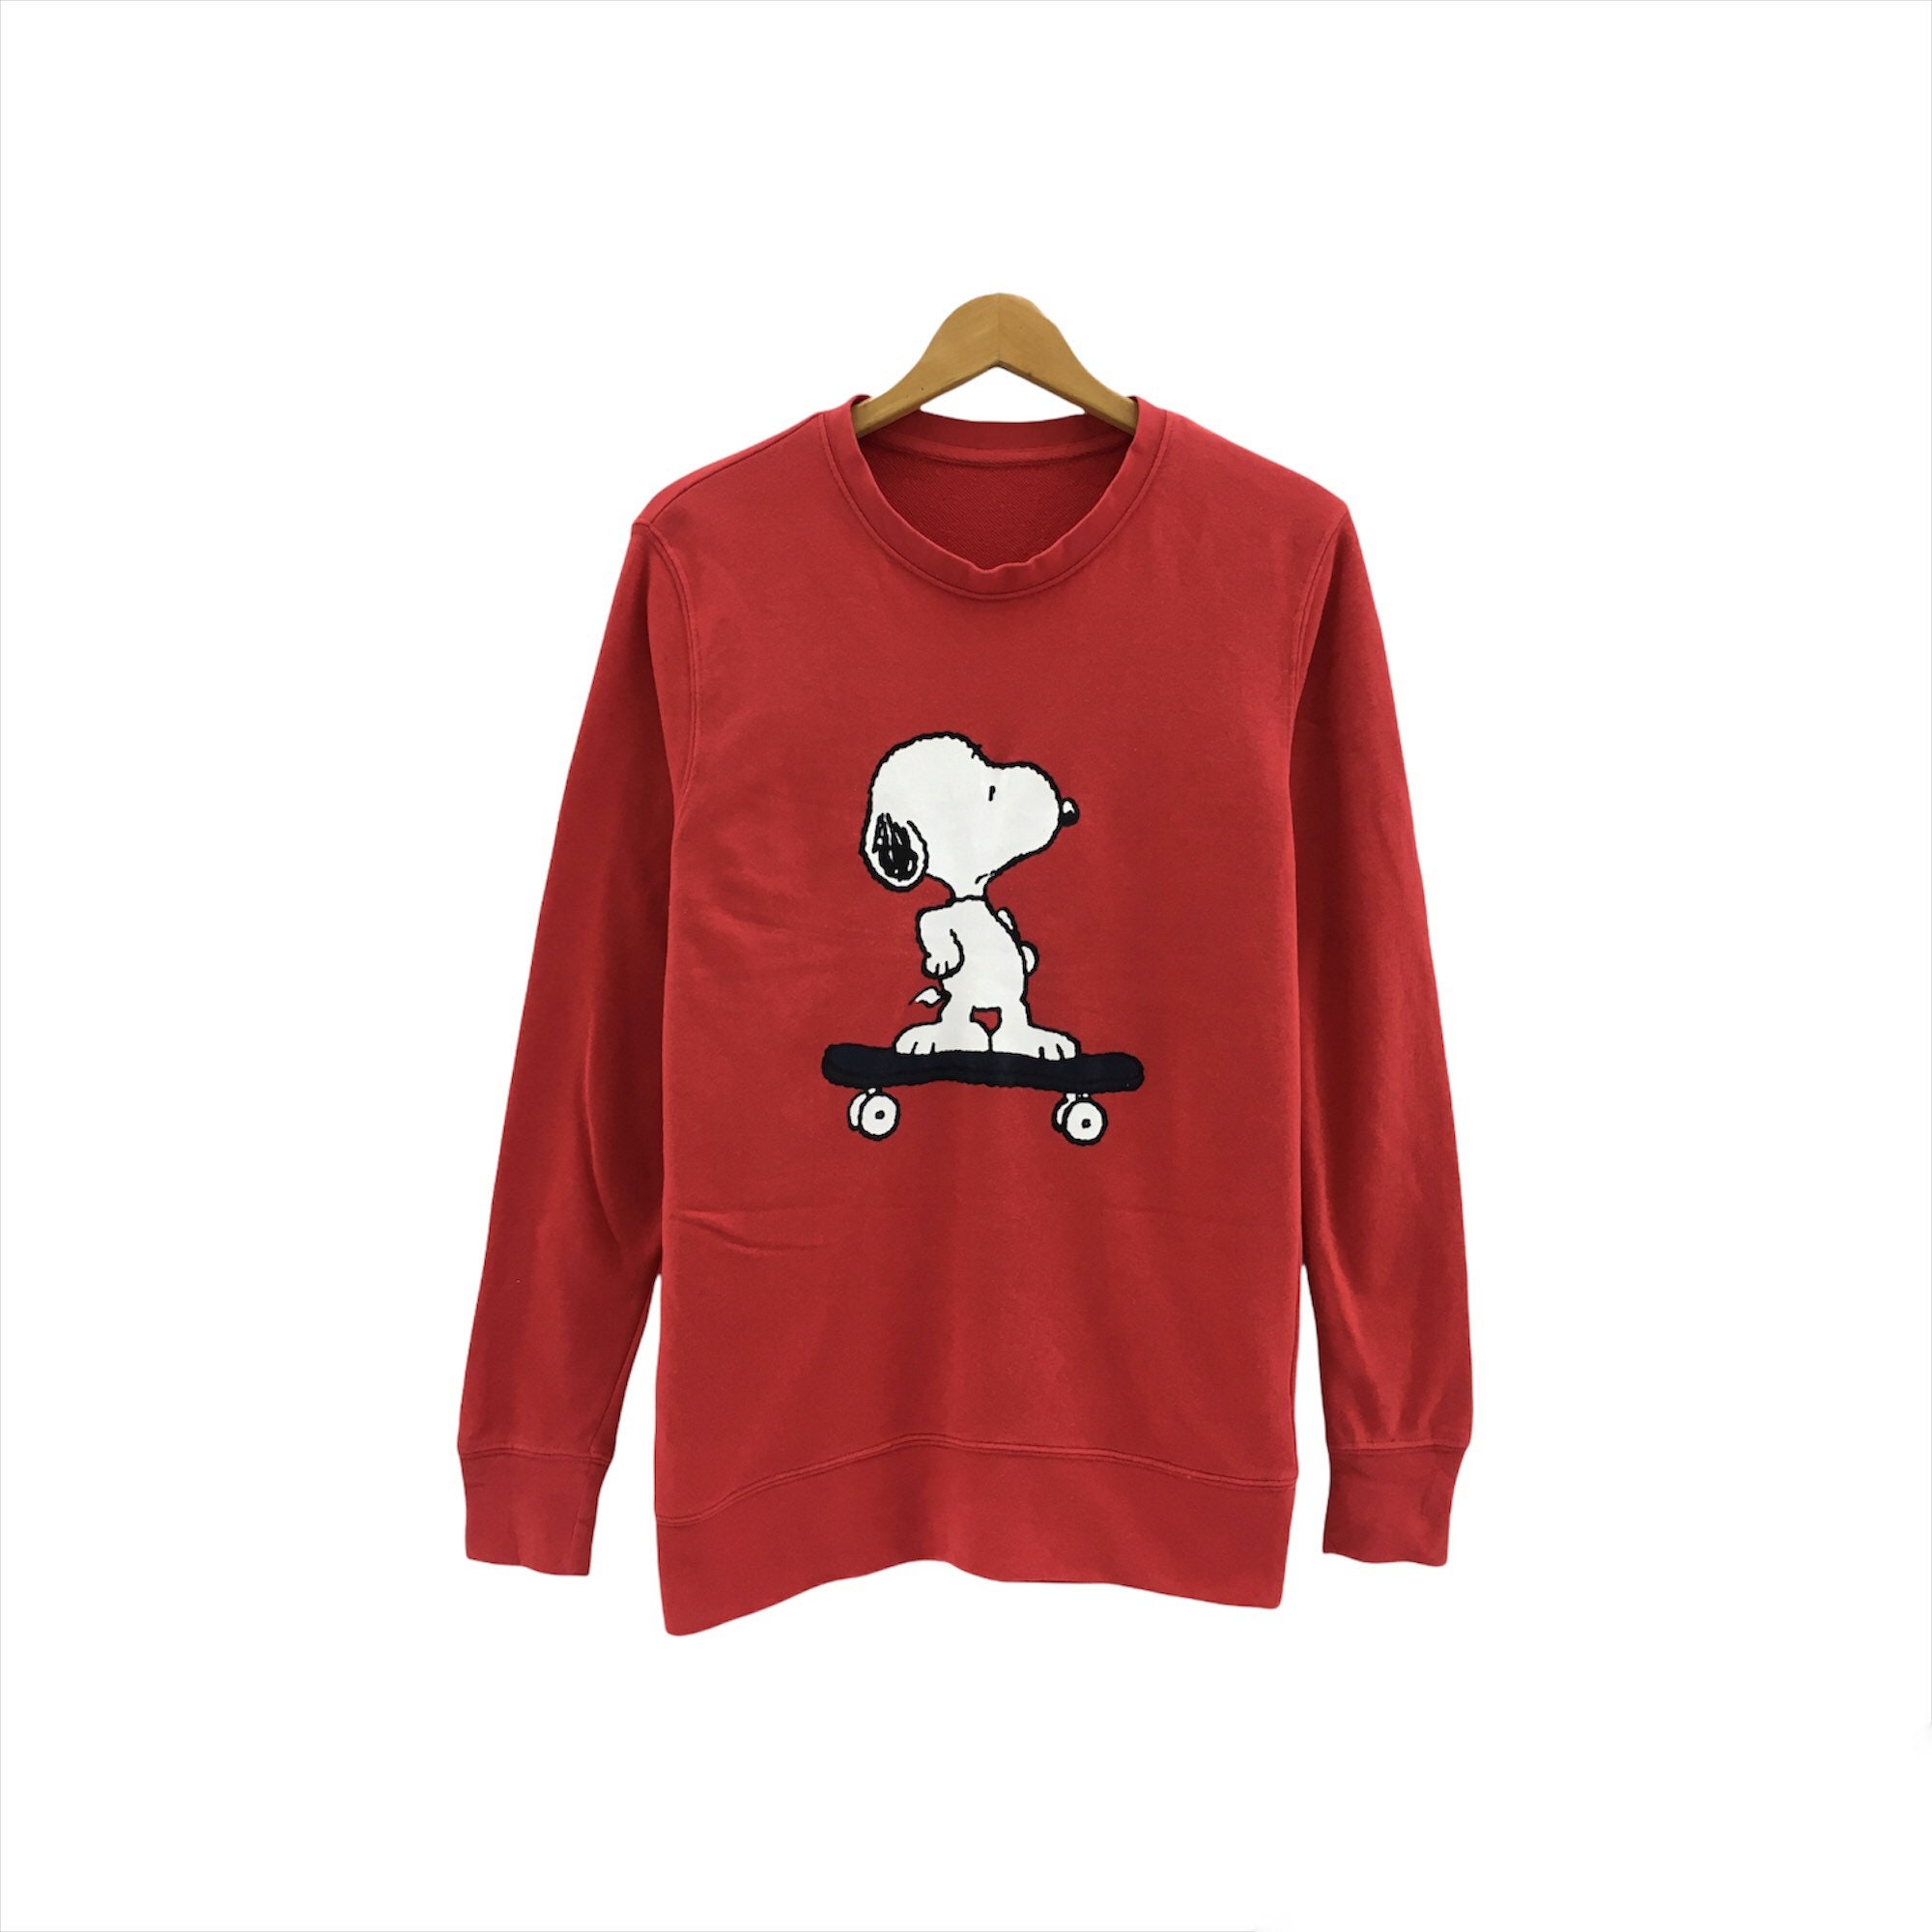 Rare Snoopy Peanuts Skateboard Big Logo Crewneck Red Color Pullover Jumper  Sweatshirt Cartoon Characters Comics Illustration Style Fashion 